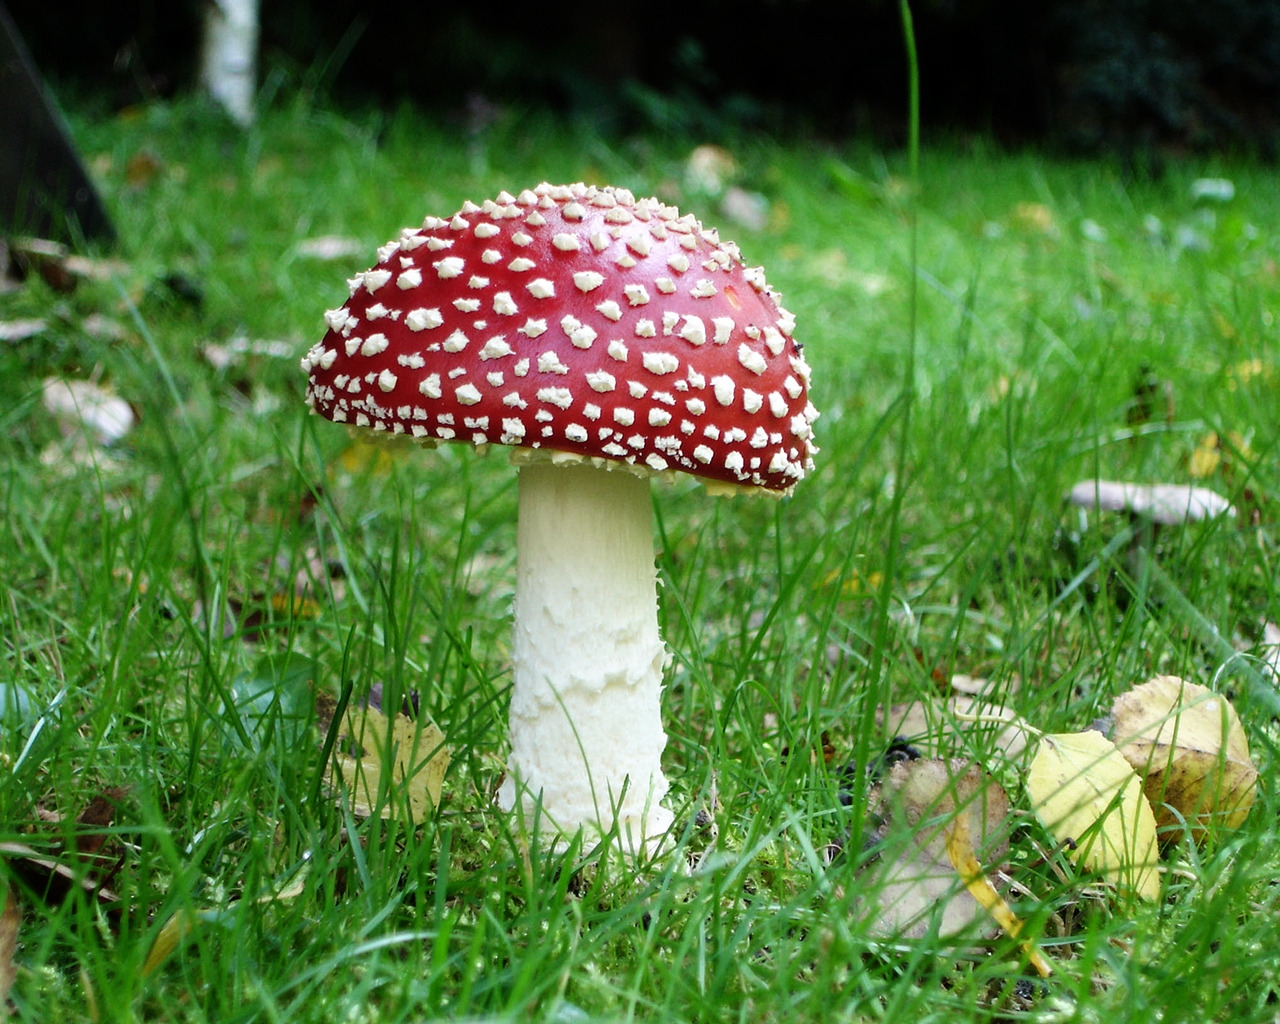 Epic Mushroom for 1280 x 1024 resolution